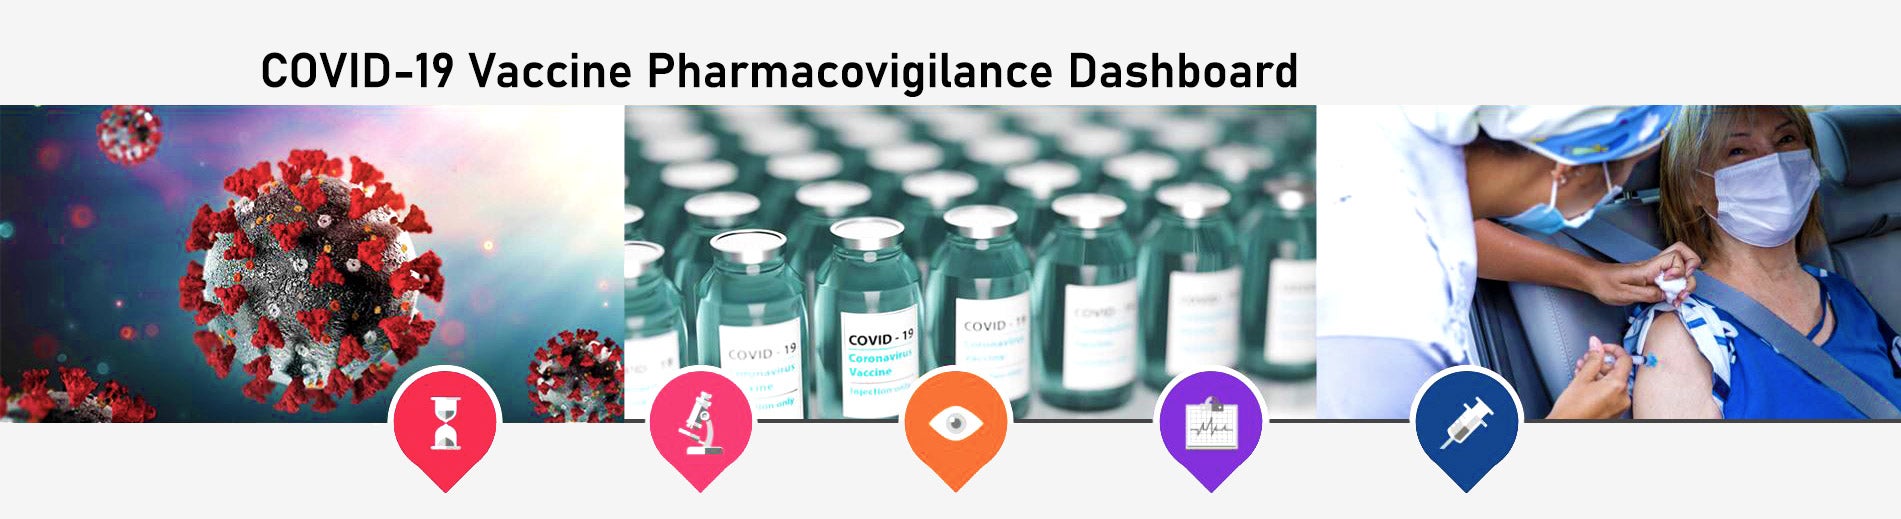 COVID-19 Vaccine Pharmacovigilance Dashboard